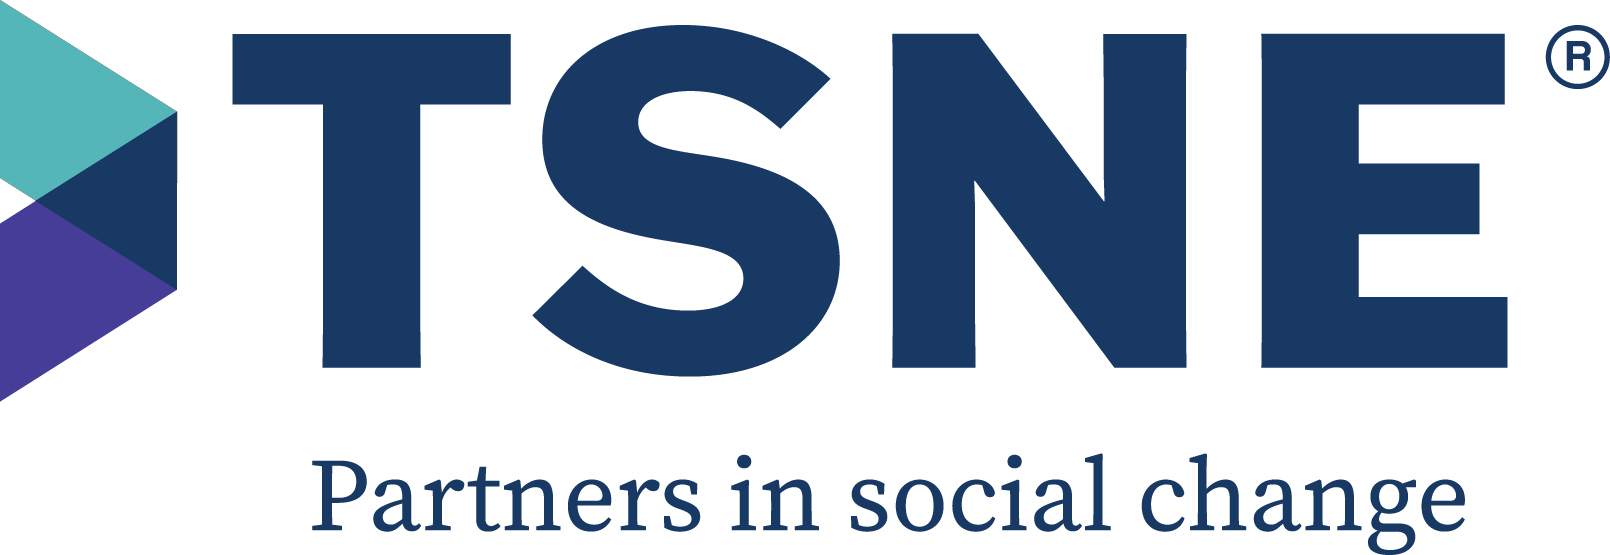 TSNE logo with tagline partners in social change